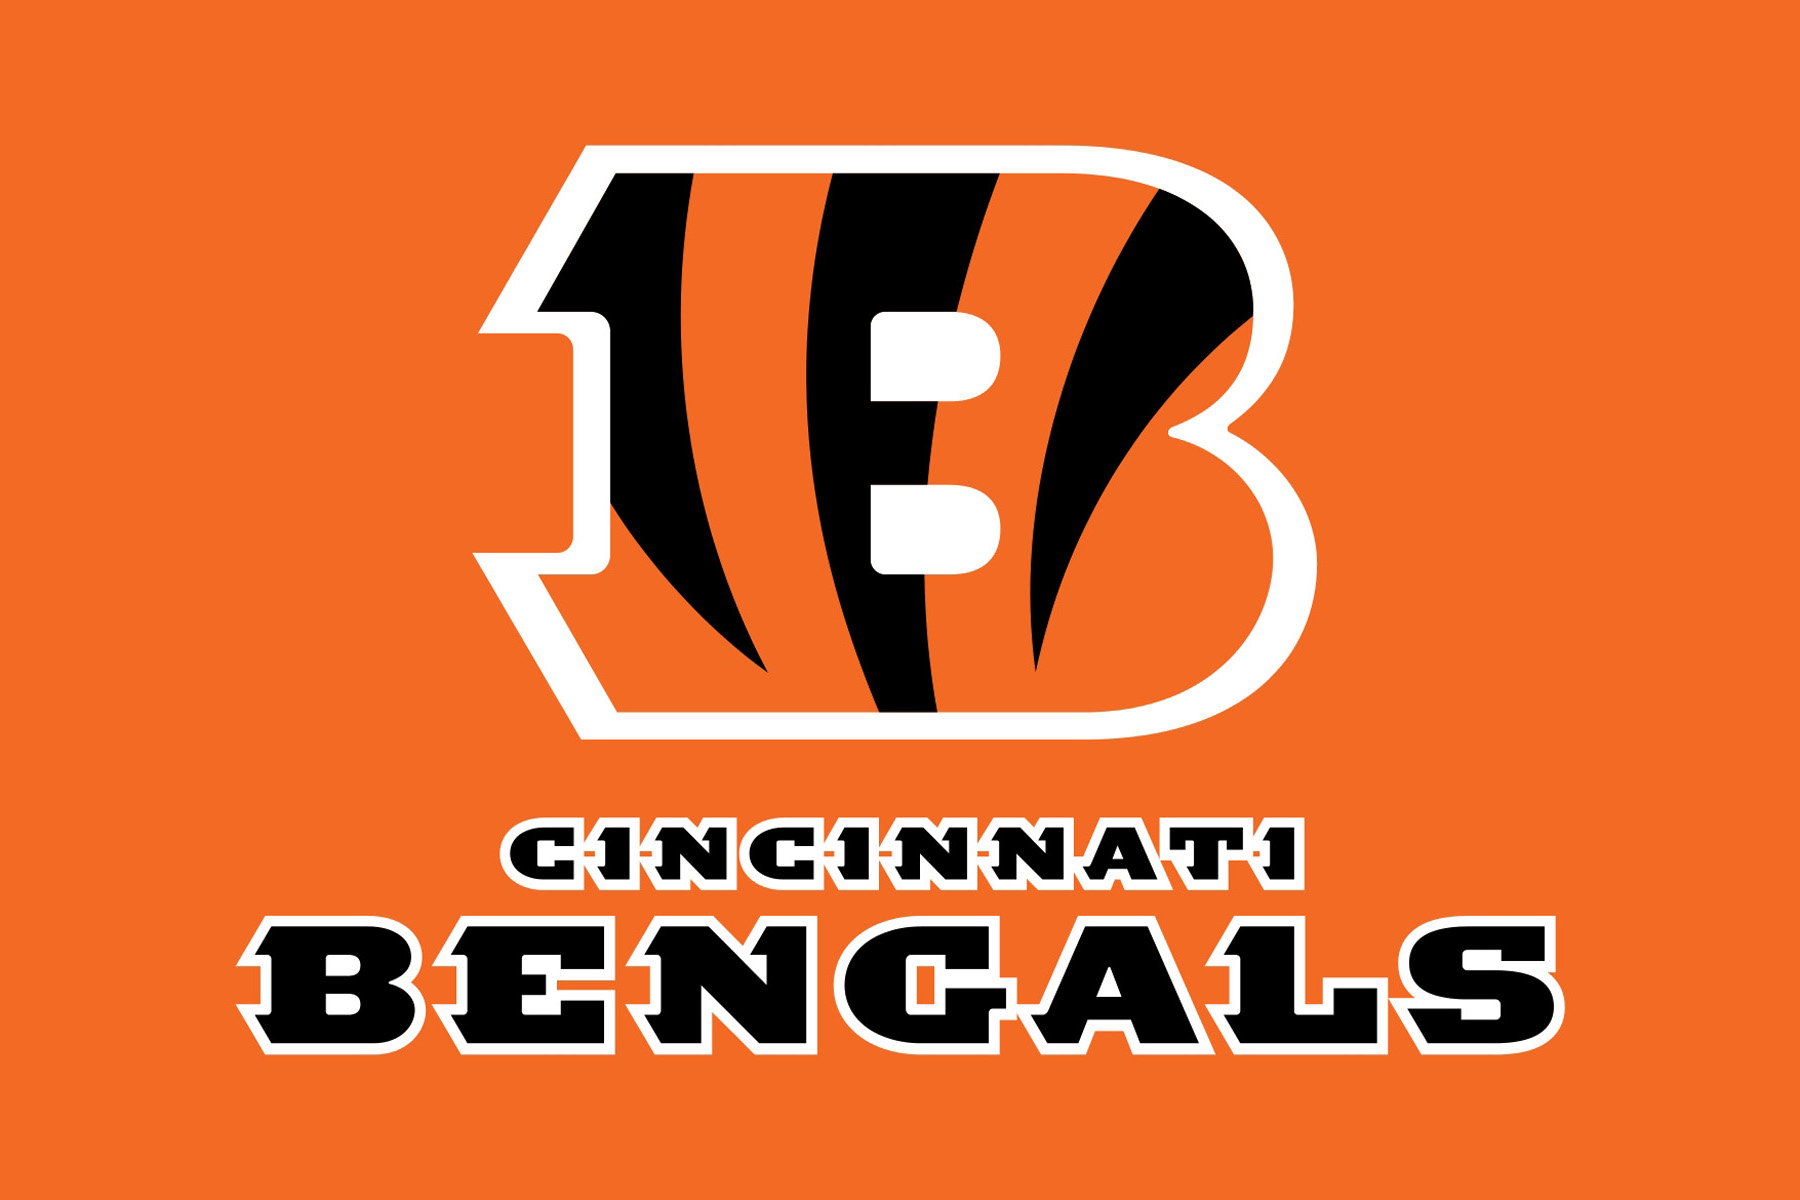 1. Cincinnati Bengals Nail Art Stickers - wide 8